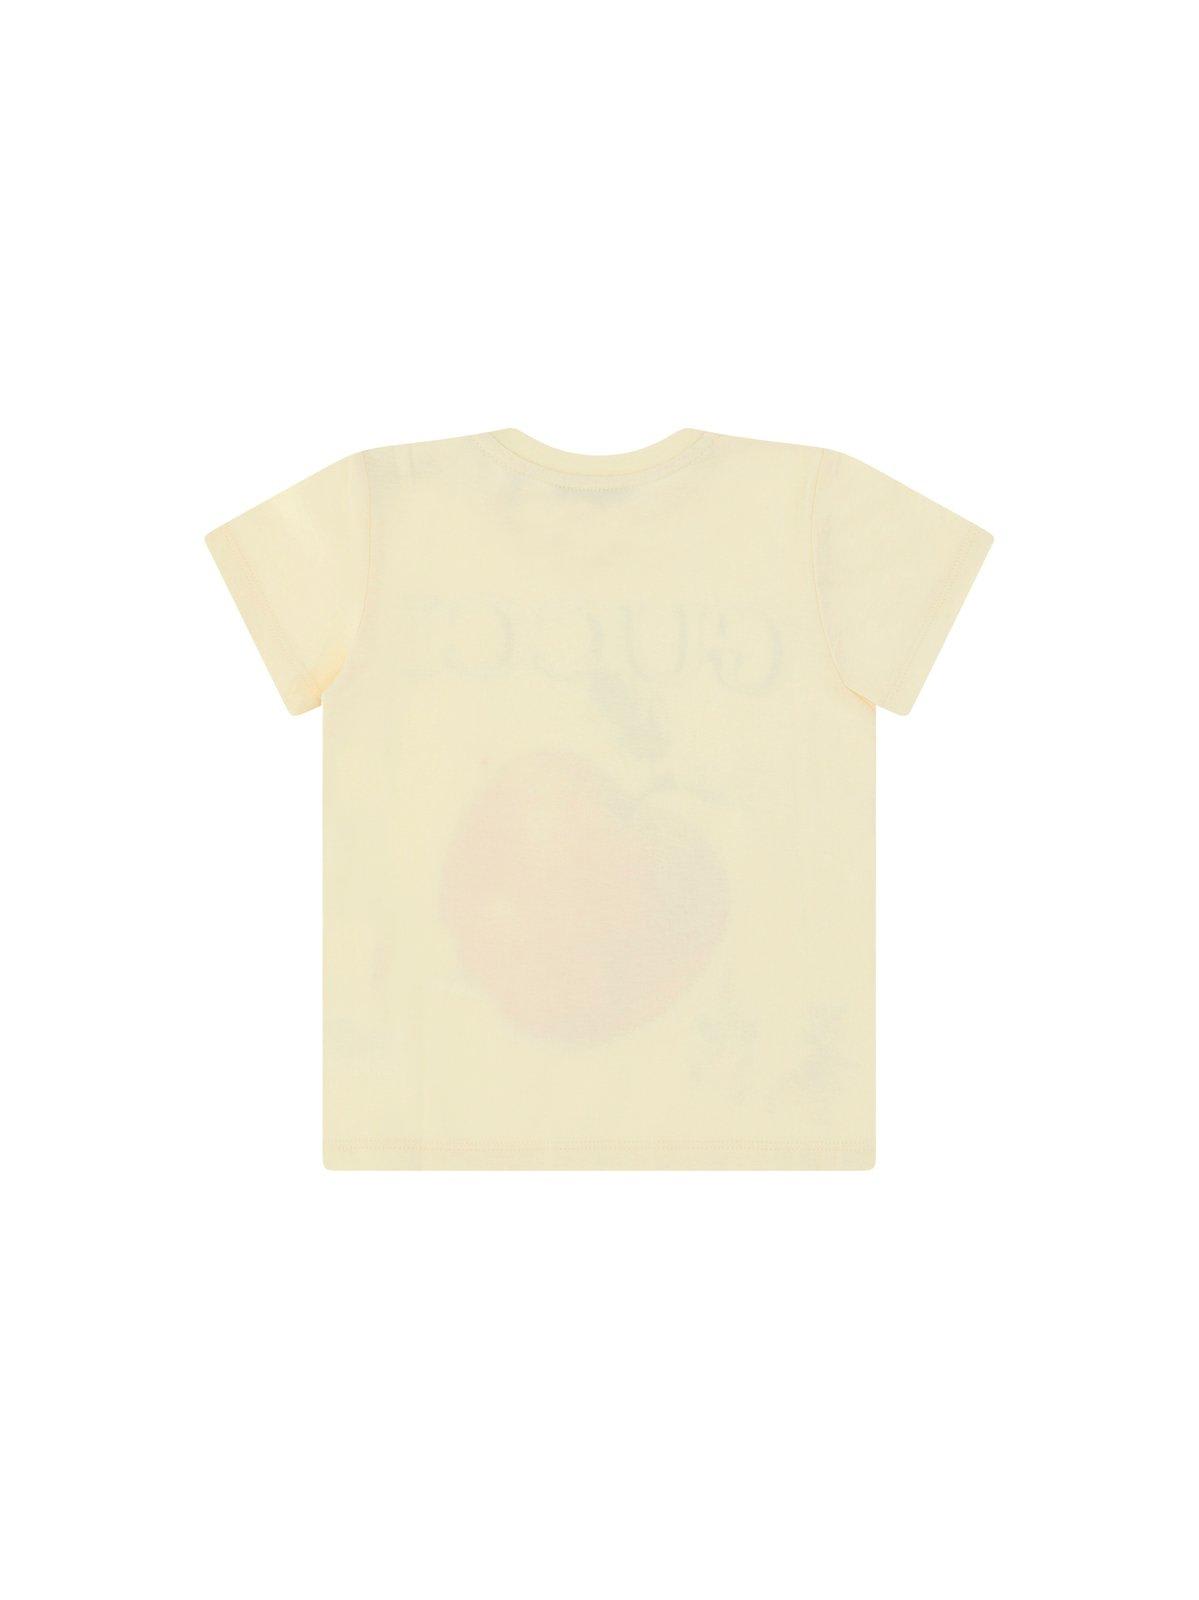 Shop Gucci X Peter Rabbit Apple Printed Crewneck T-shirt In Yellow